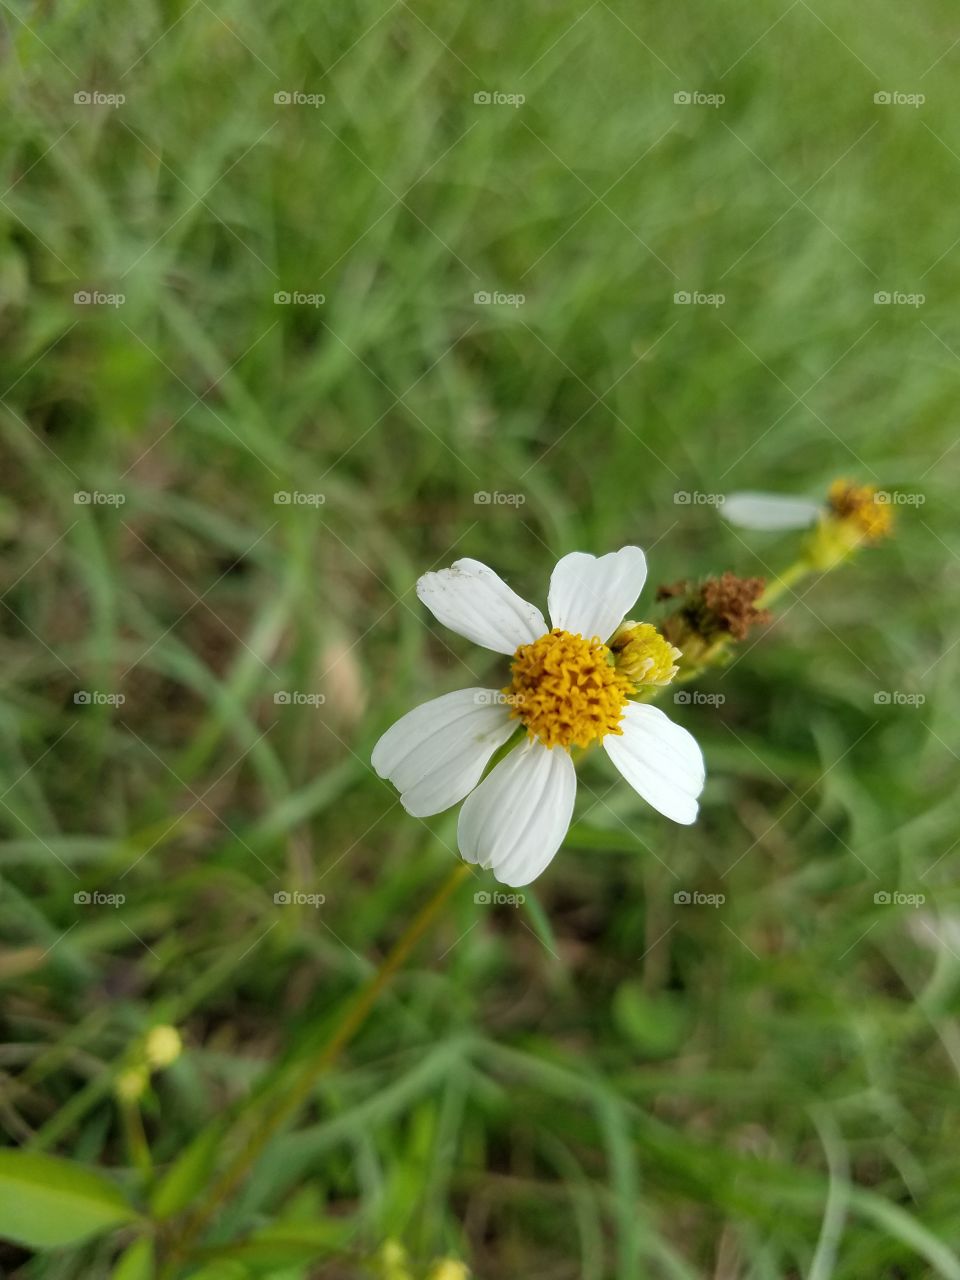 Tiny Flowers Up Close